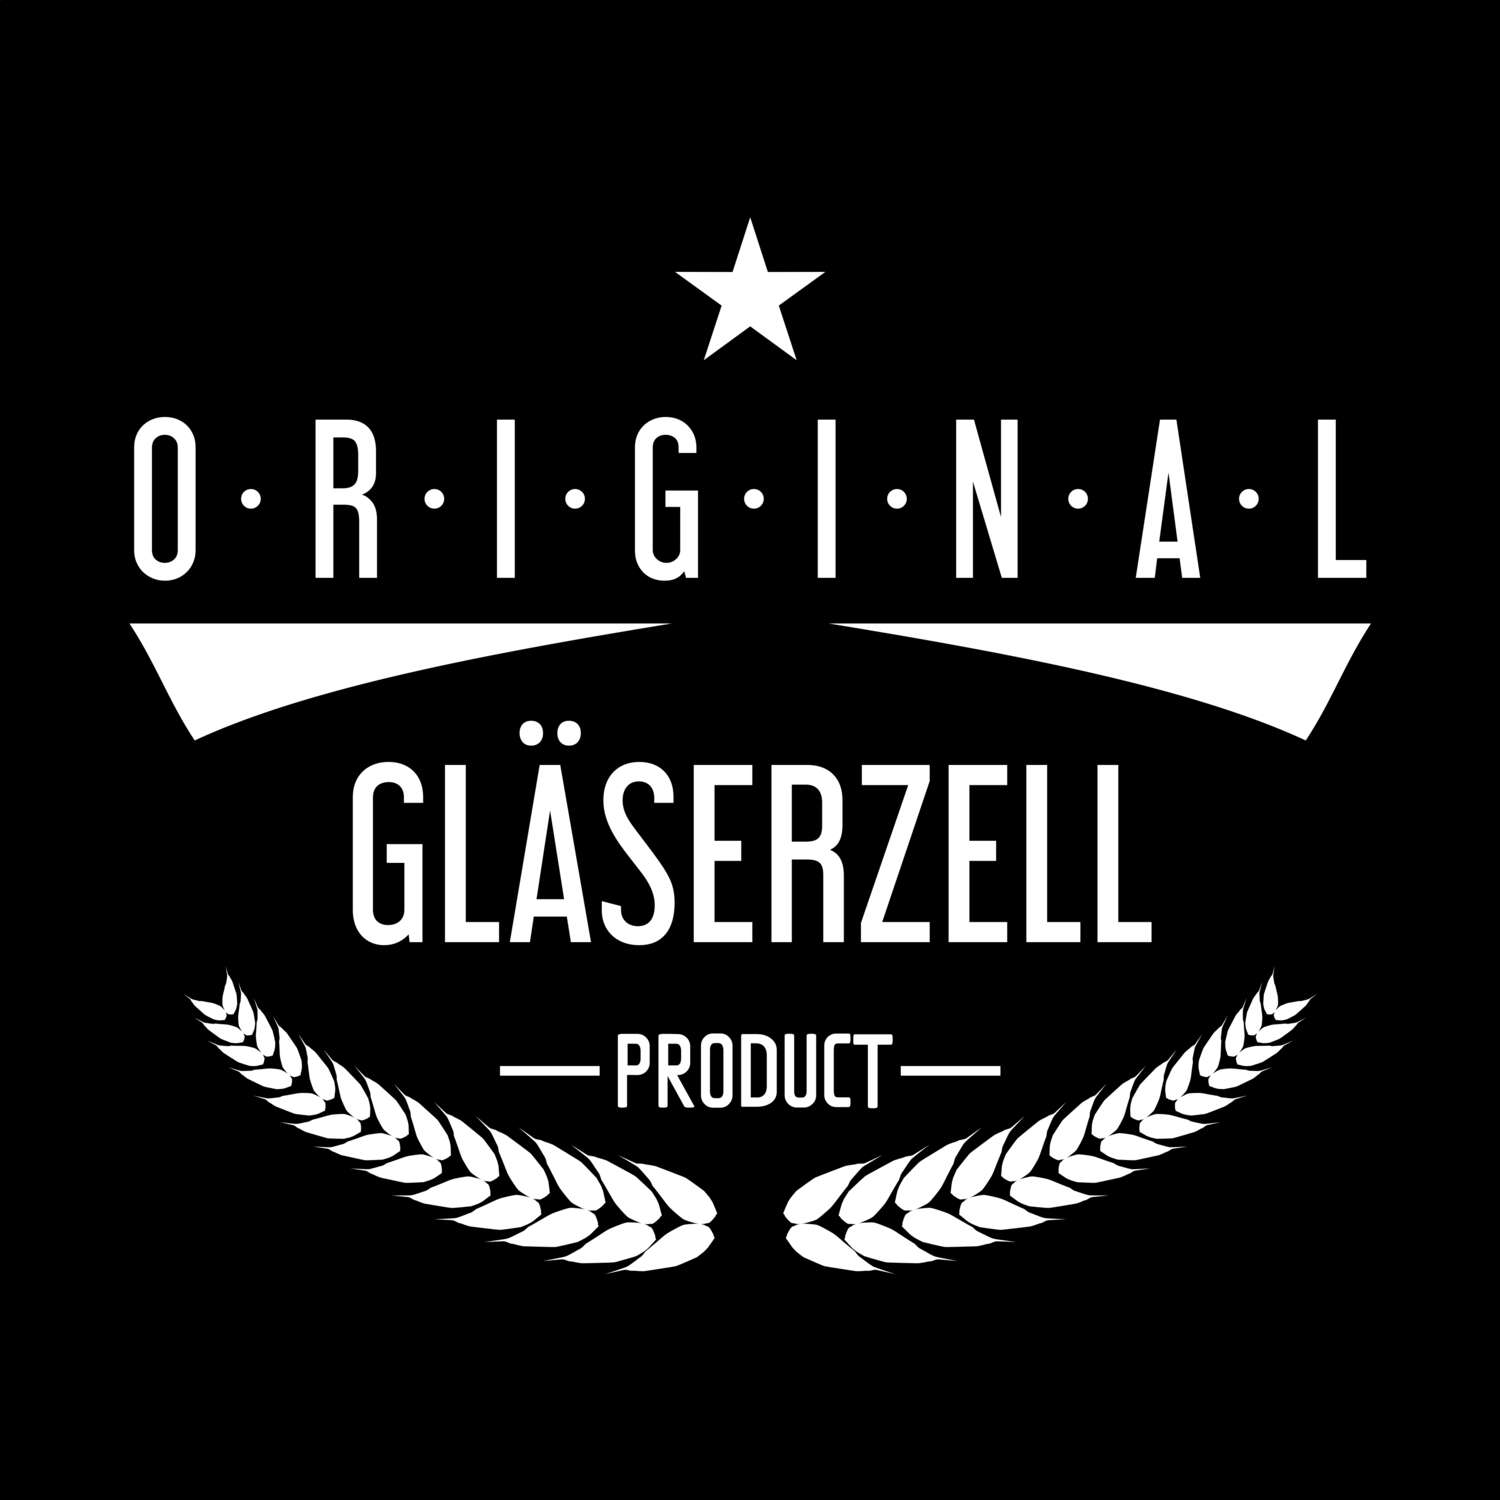 Gläserzell T-Shirt »Original Product«